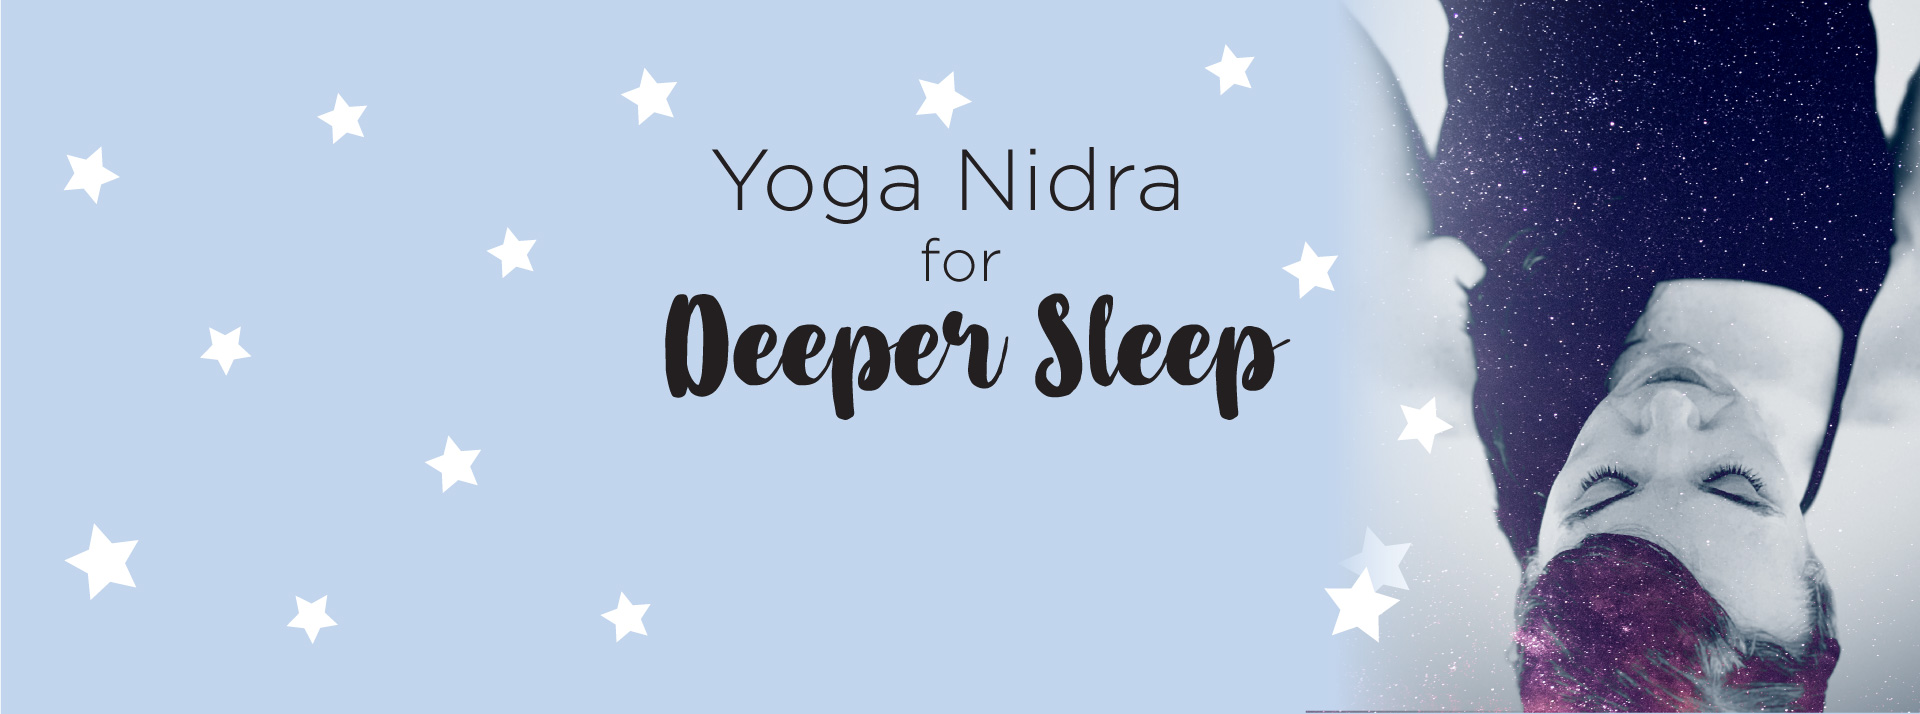 Yoga Nidra for Deeper Sleep